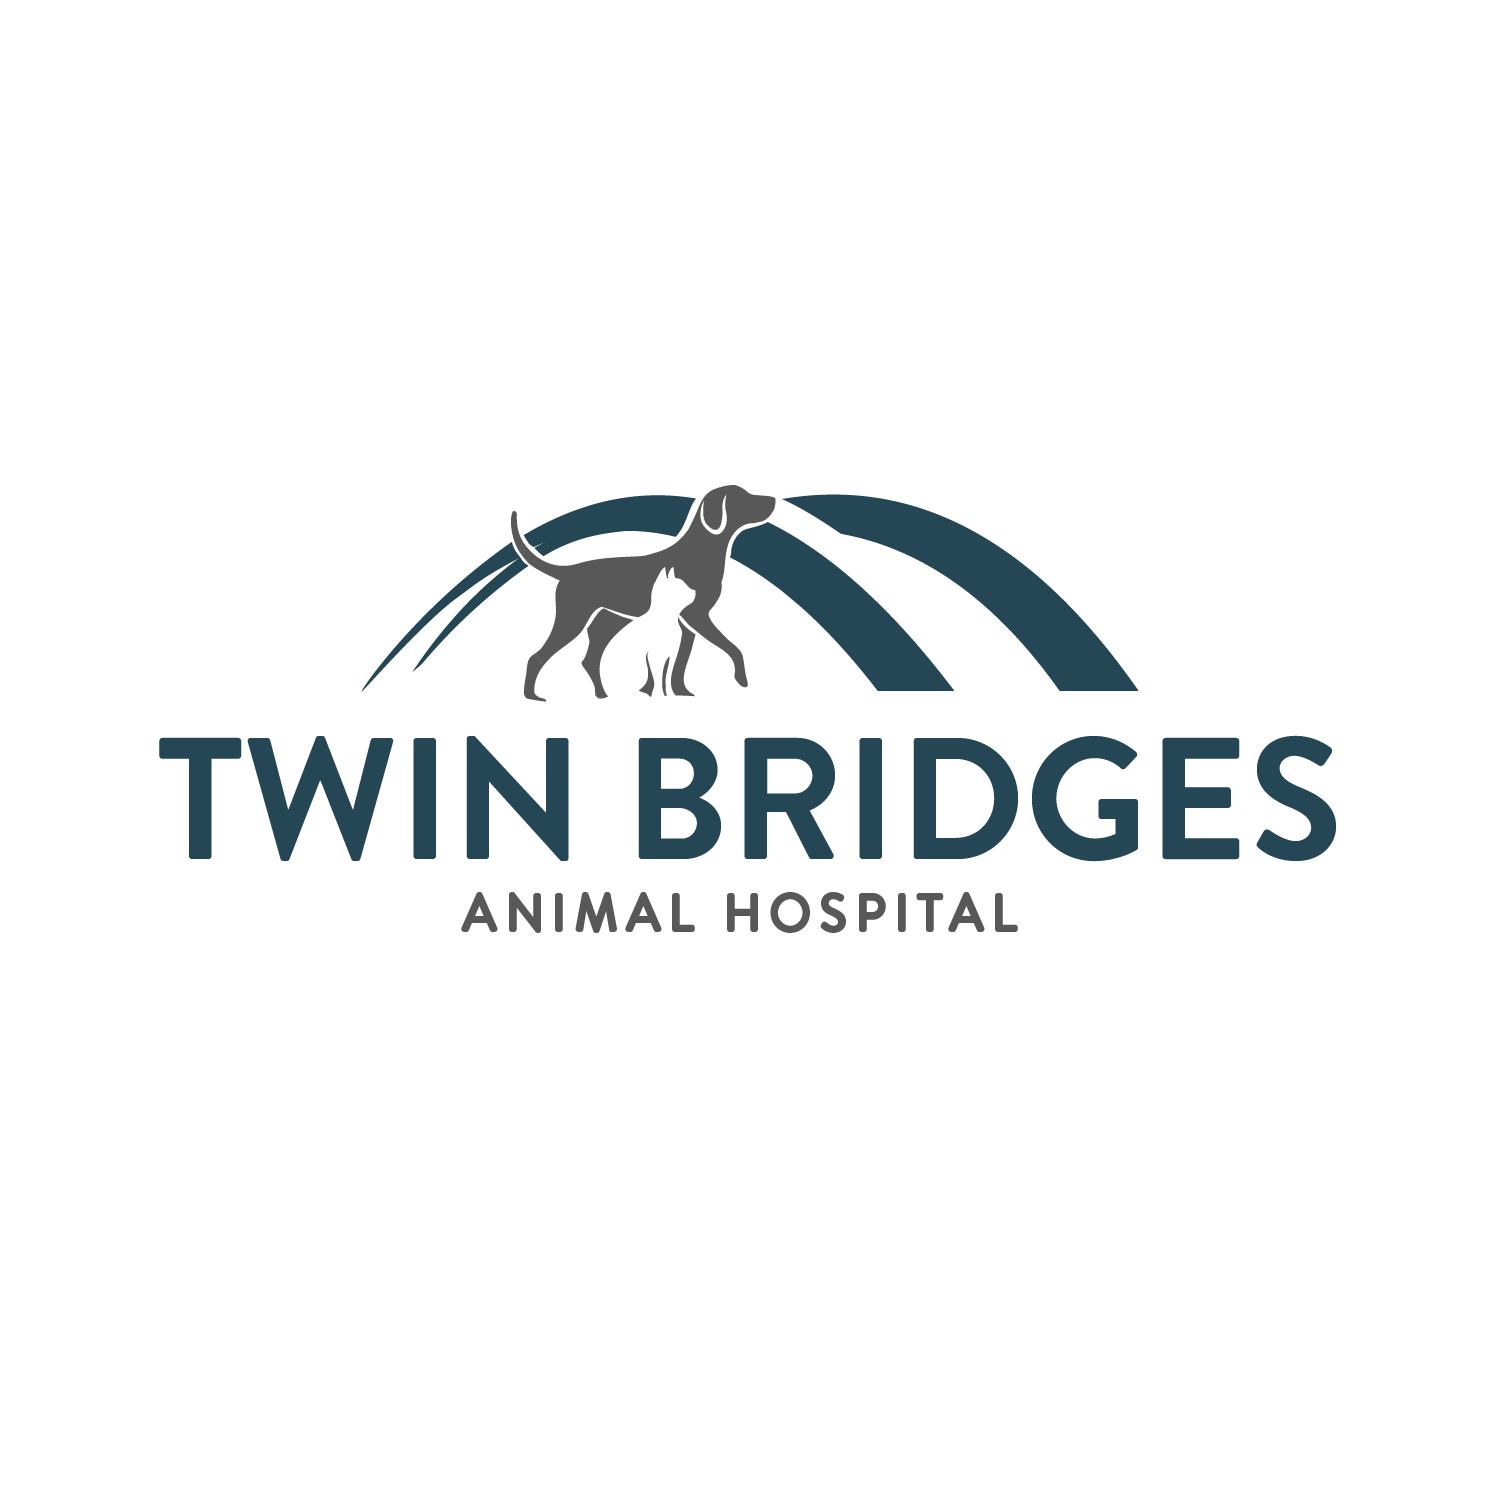 Twin Bridges Animal Hospital - Davenport, IA 52807 - (563)355-5311 | ShowMeLocal.com